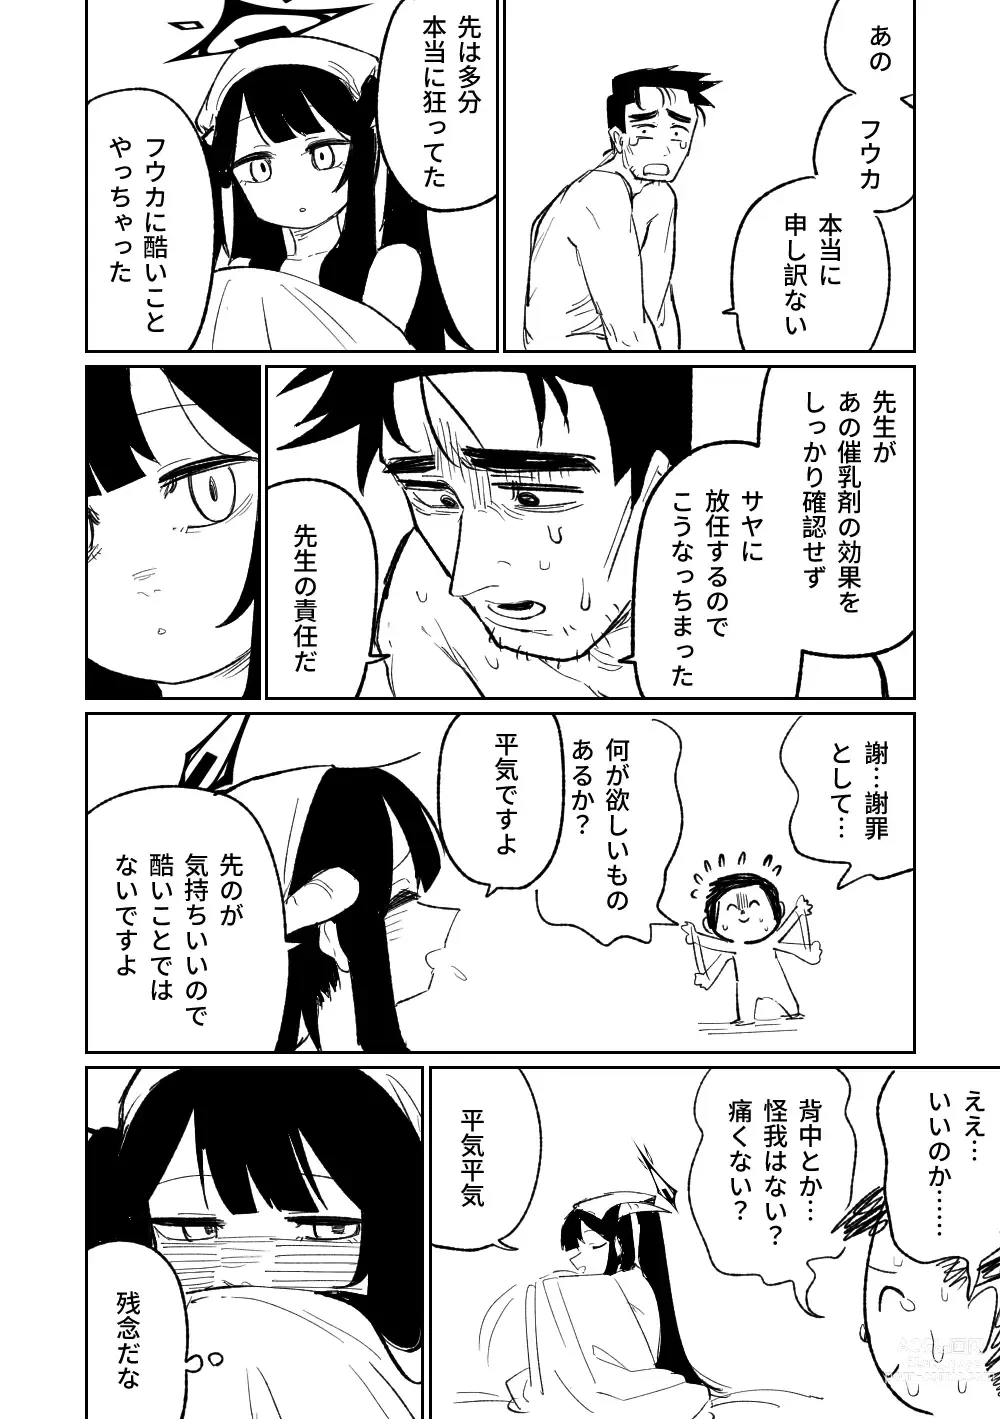 Page 41 of doujinshi 風華・毒藥・下主菜